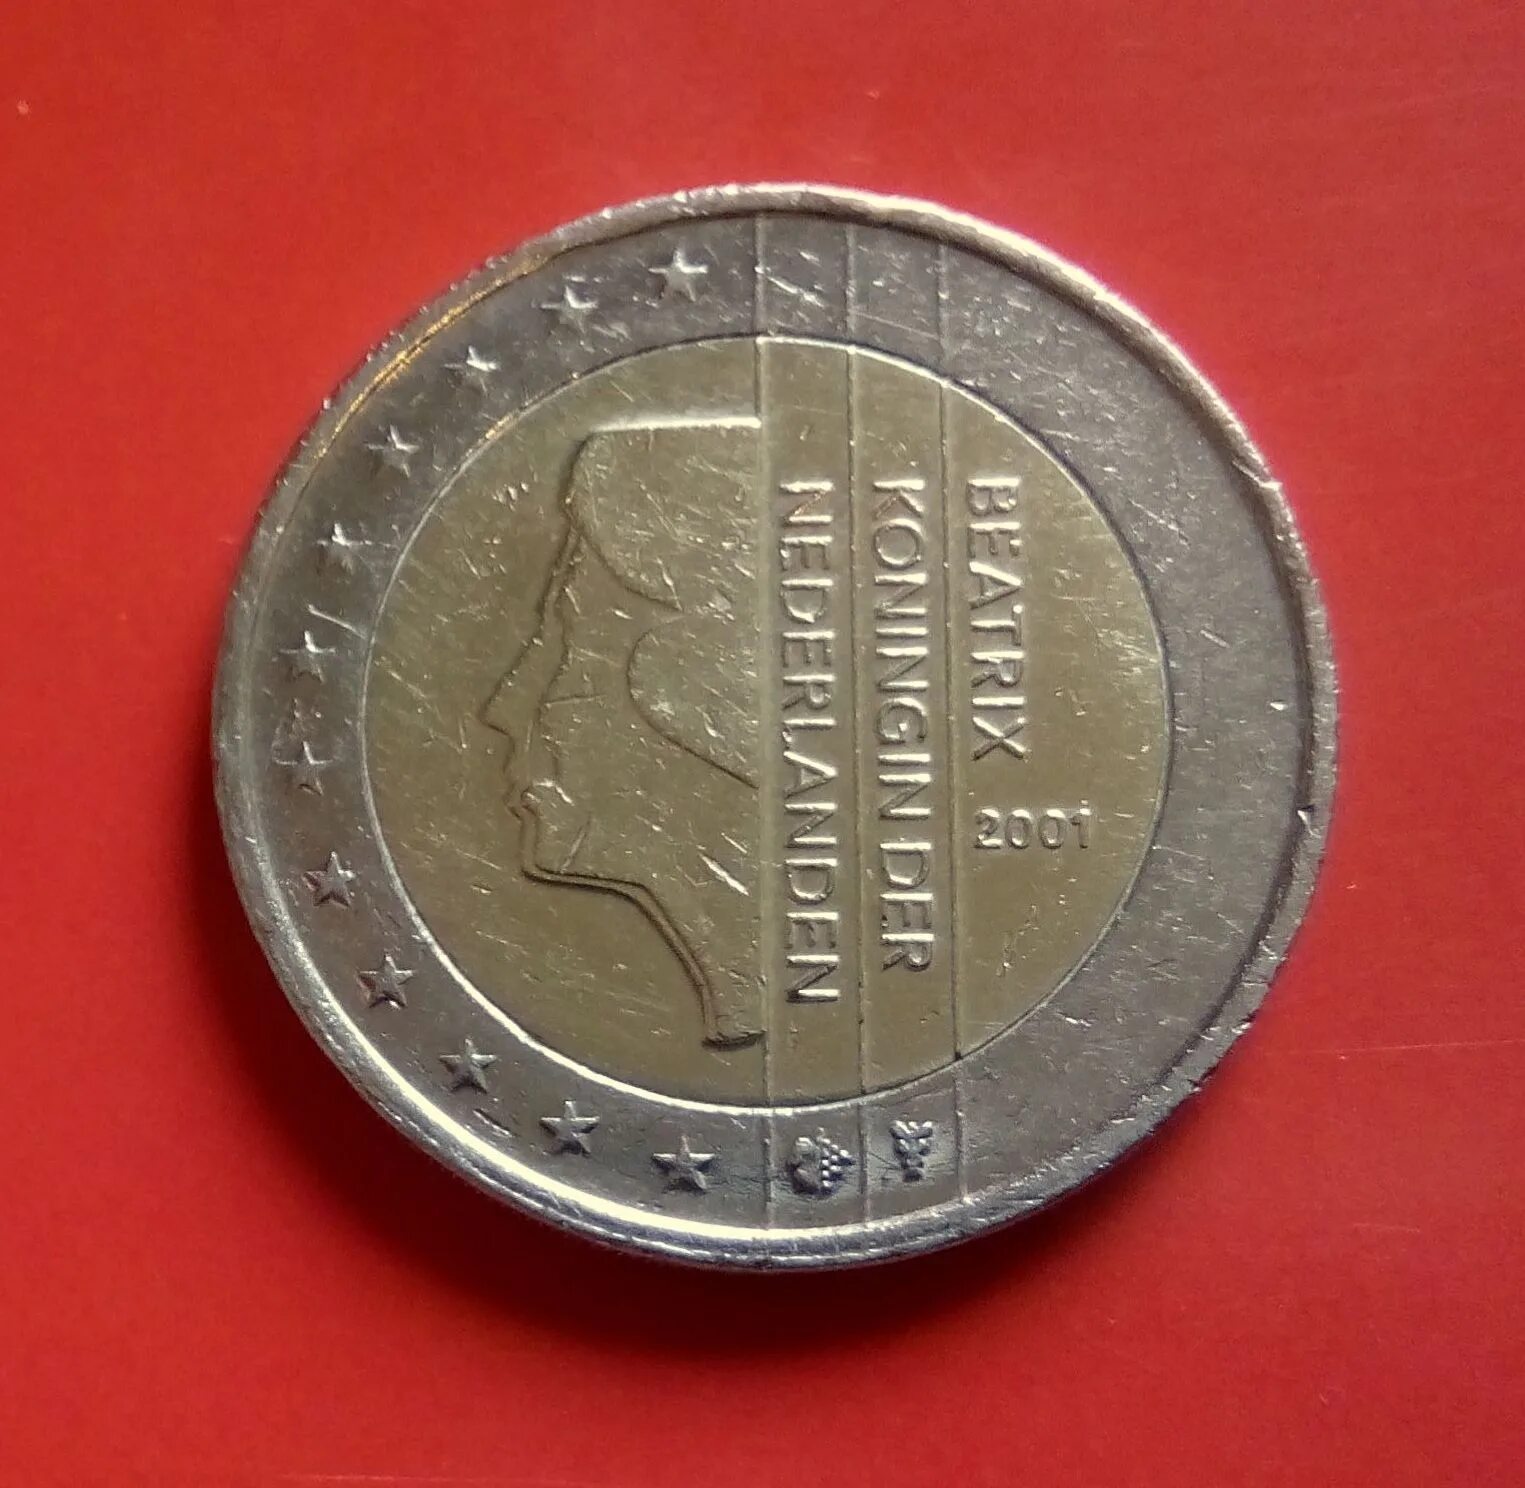 Включи евро 2. 2 Евро Нидерланды 2001. 2 Евро 2001 Нидерланды Биметалл. Монета 2 евро Nederlanden 2001. 2 Евро Нидерланды 2000.